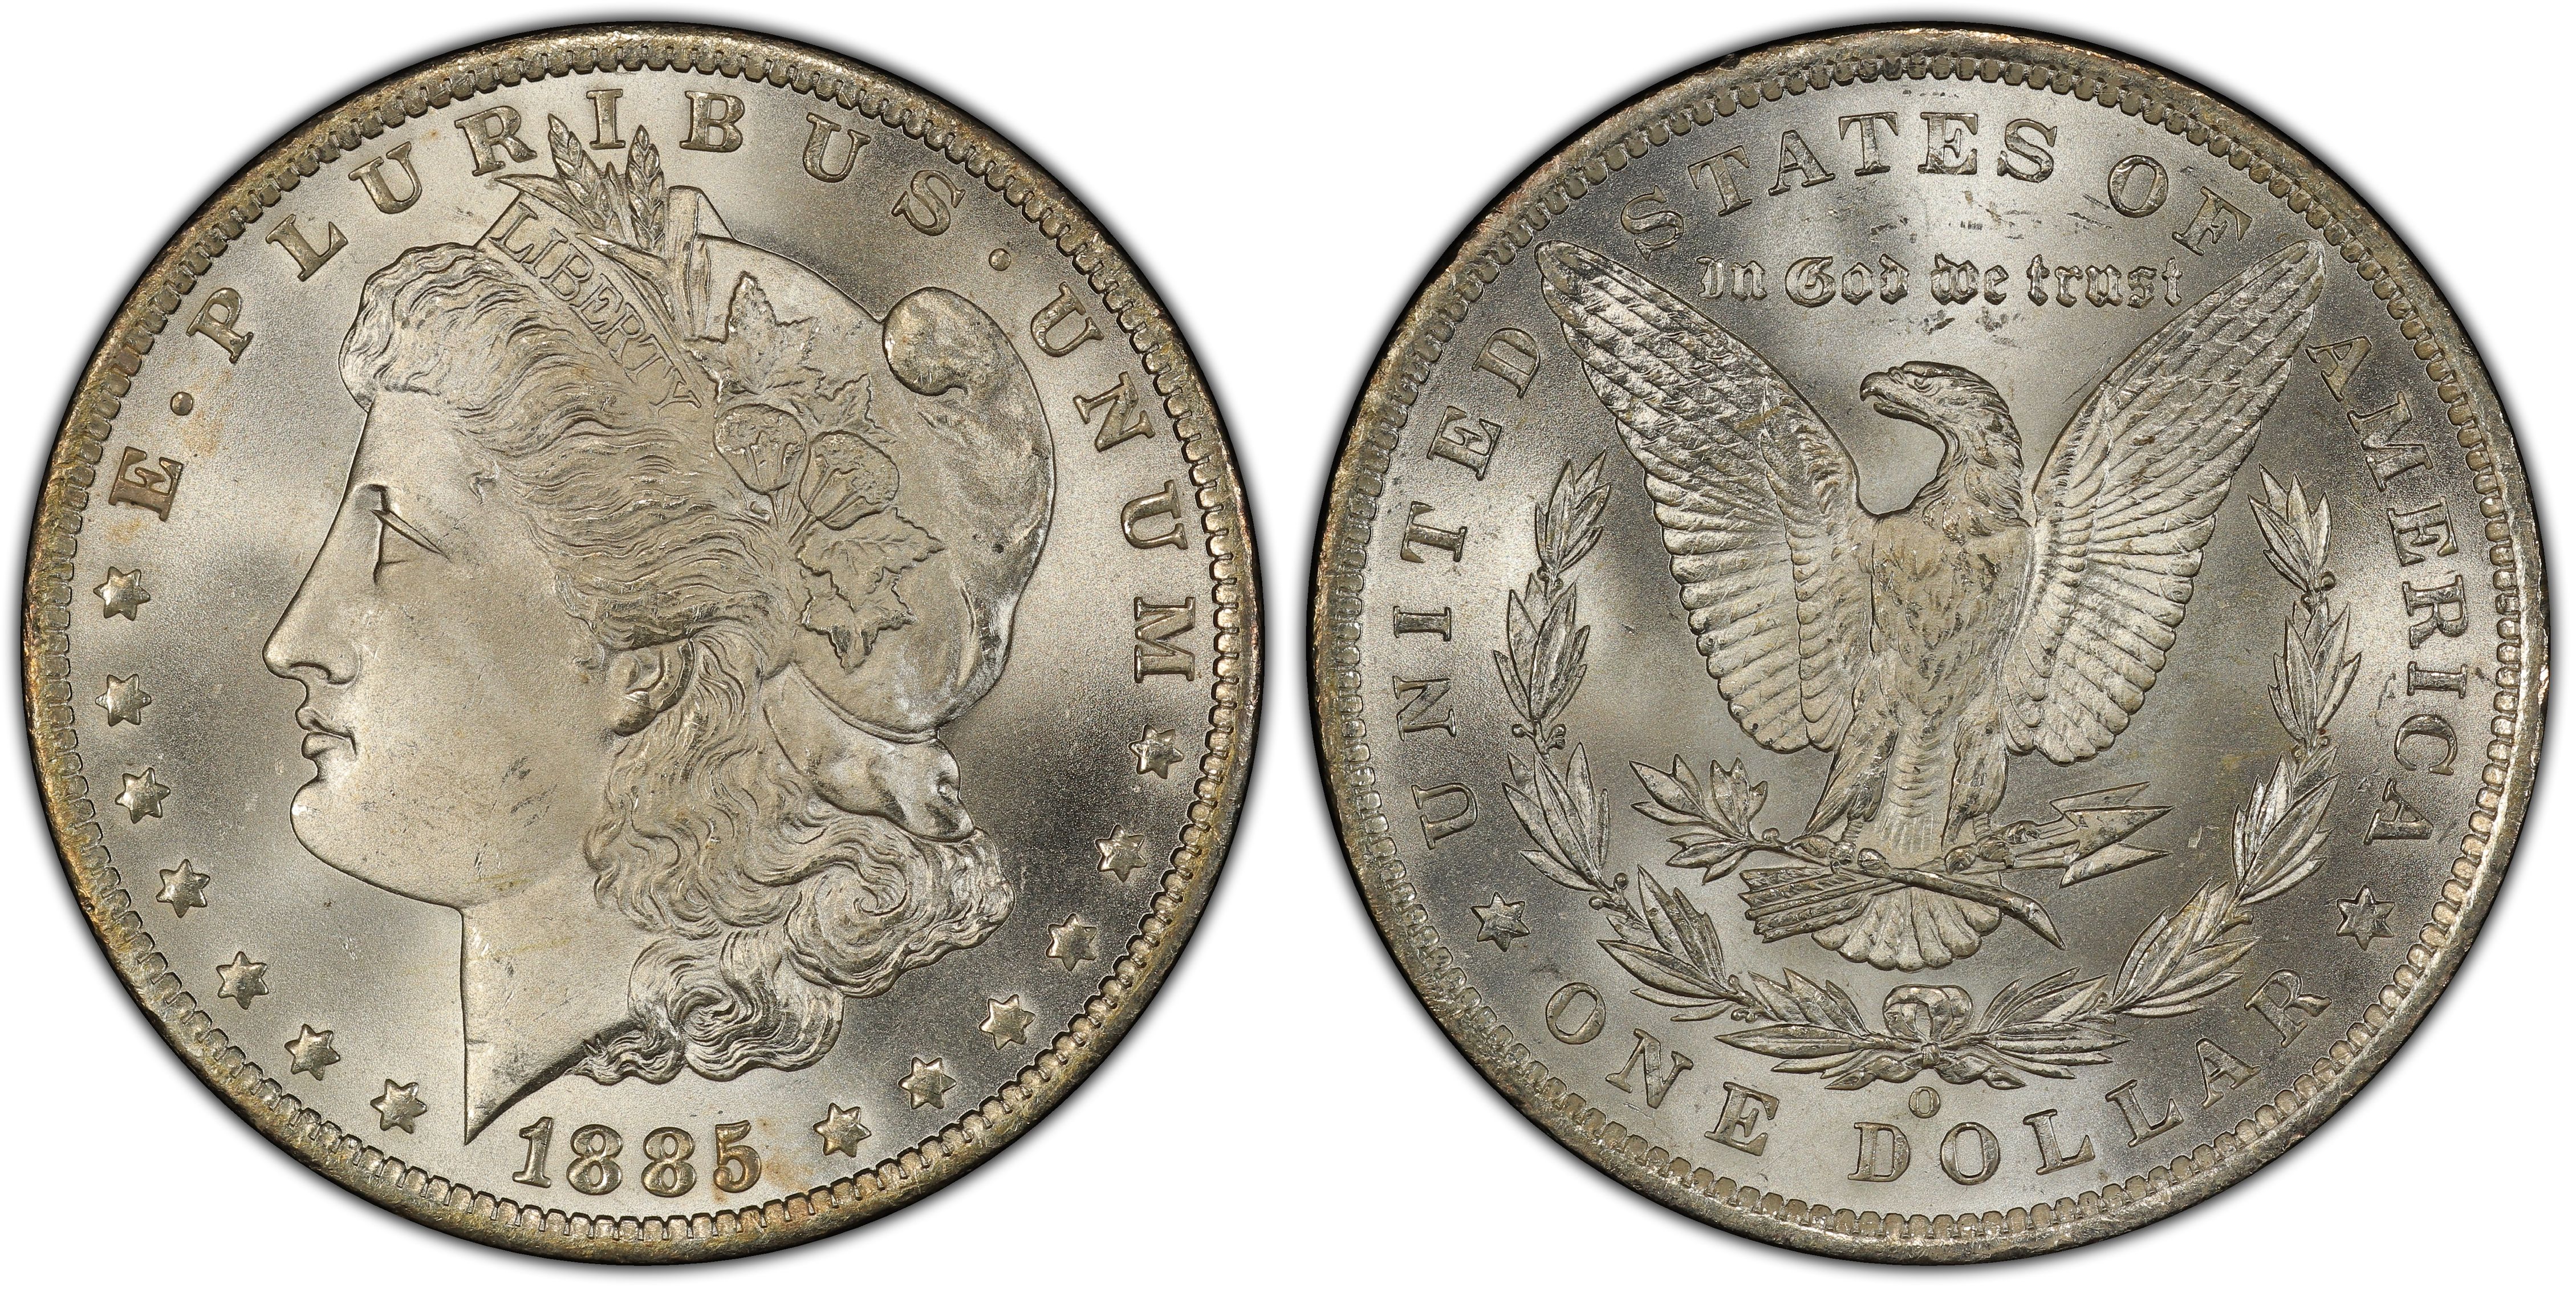 Morgan Silver Dollar Uncirculated 1885